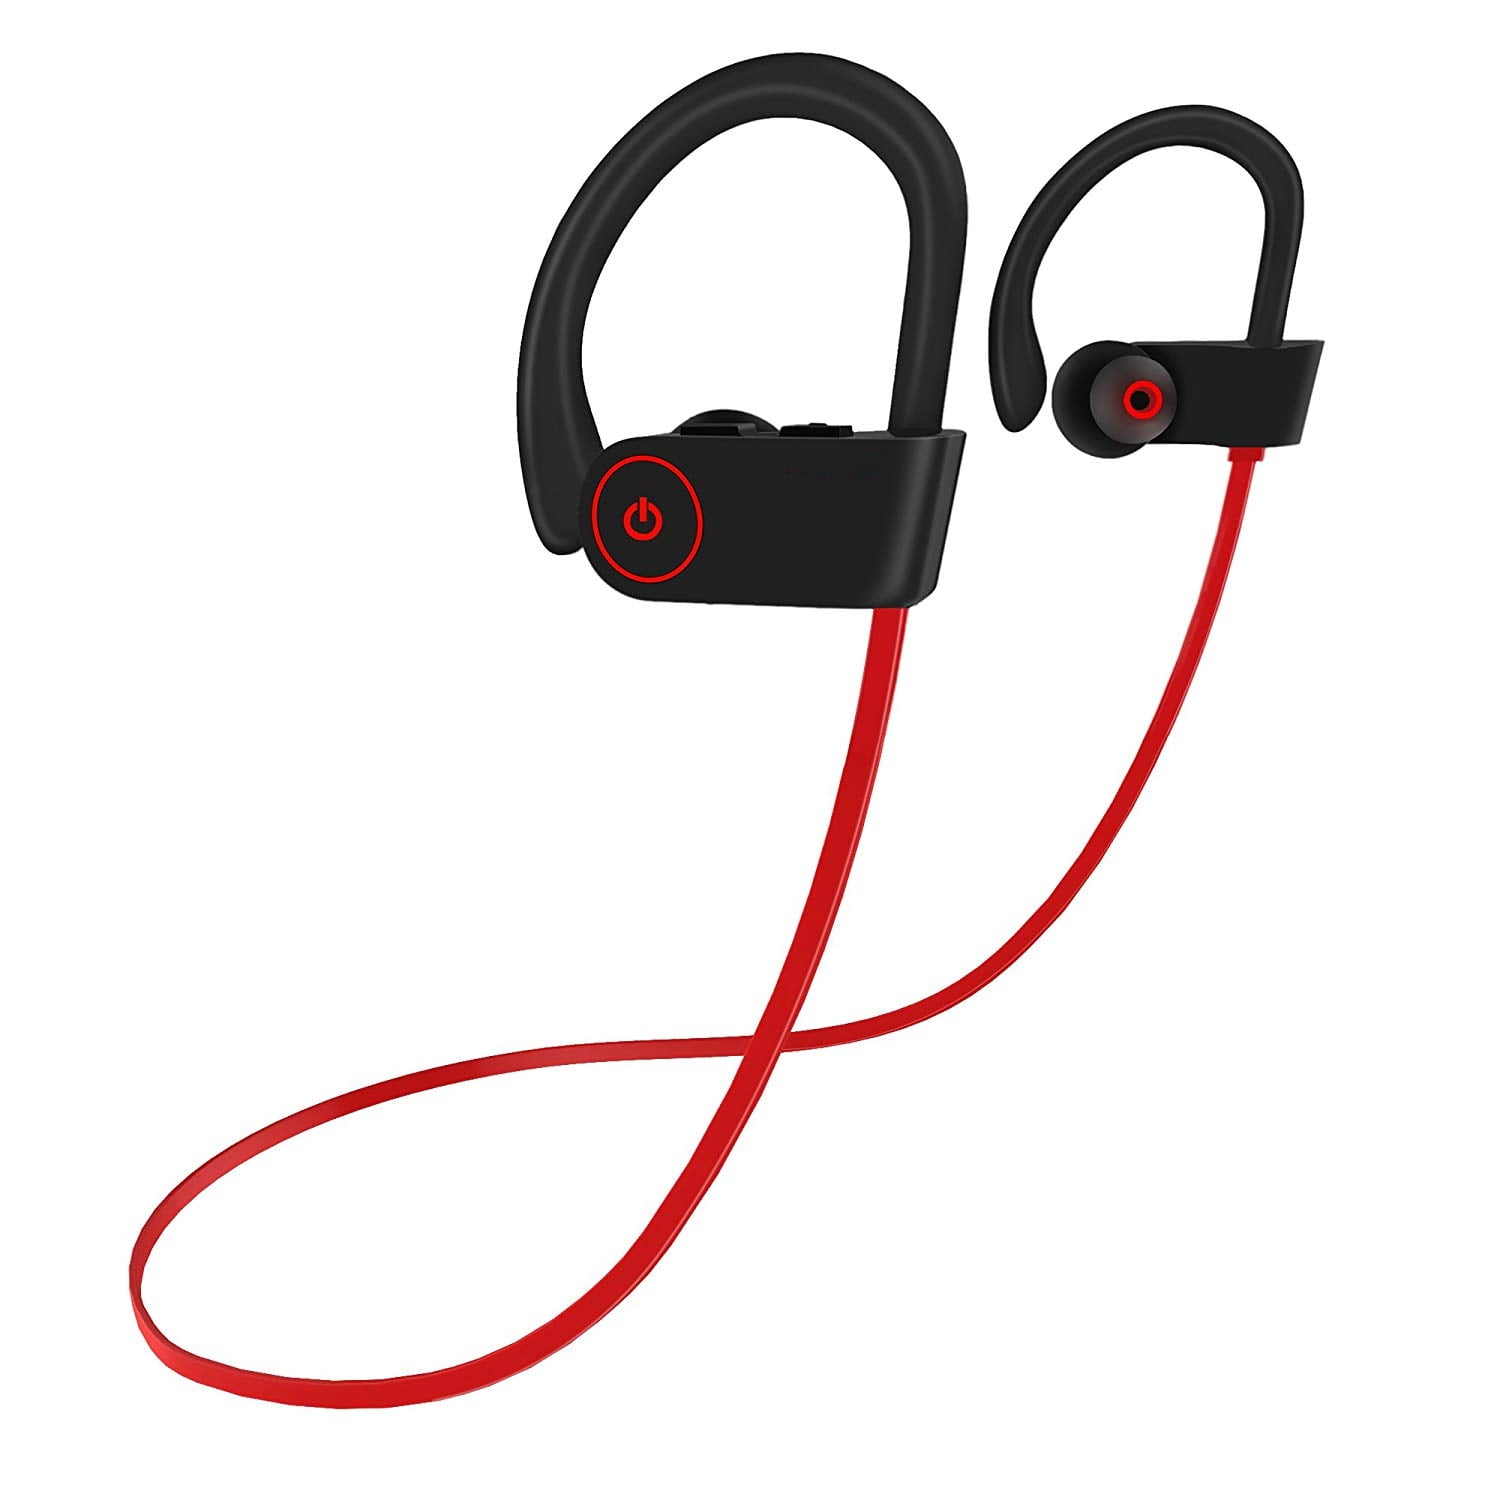 Bluetooth Headphones, Wireless Earbuds, IPX7 Waterproof Sports Earphones with Ear Hooks & Mic, HD Stereo in-Ear Earbuds Gym Running Workout, 8 Hours Battery Noise Canceling Headsets